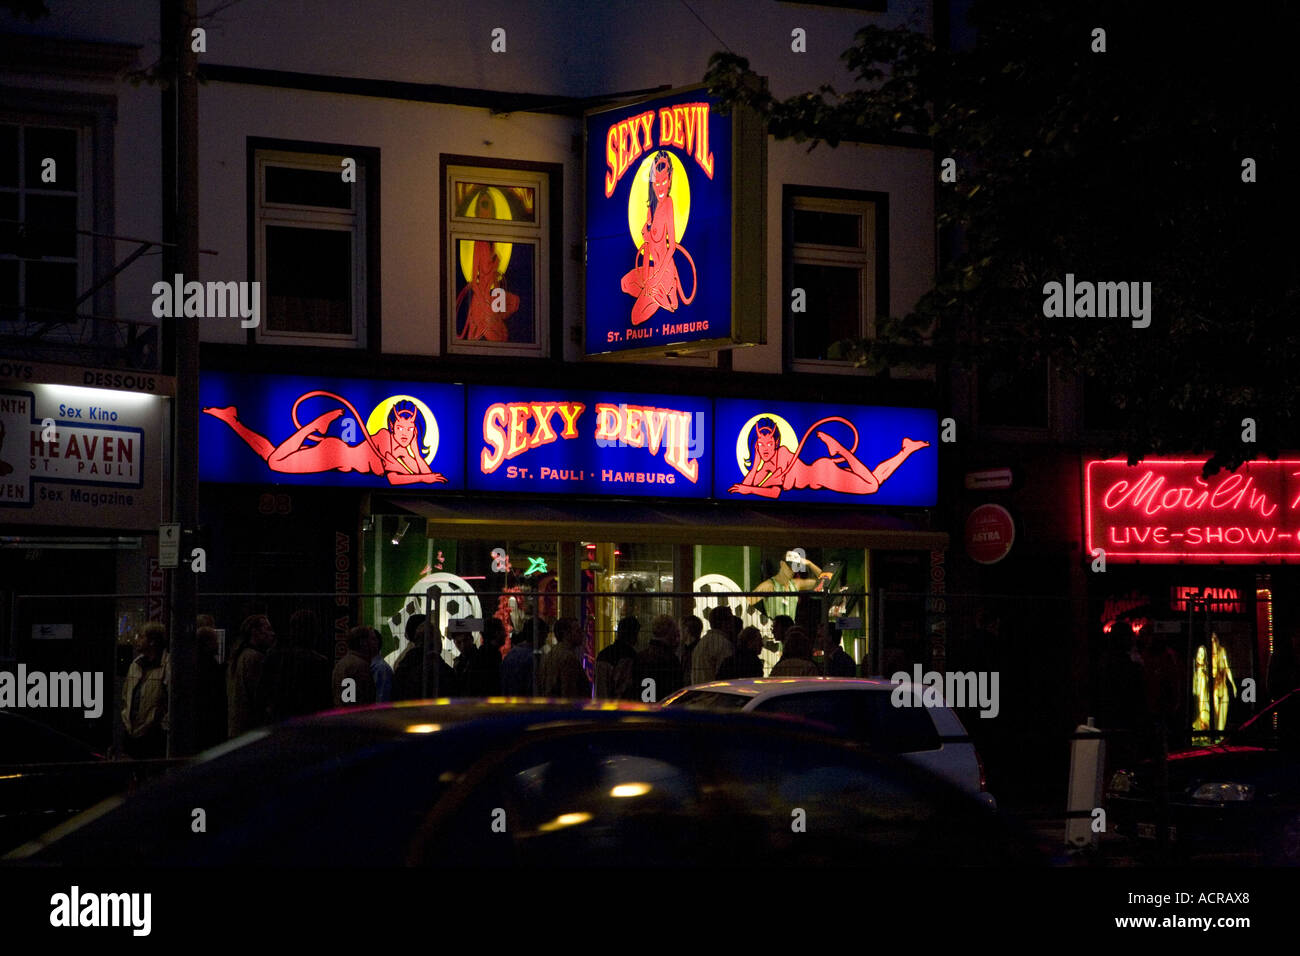 Sexy Devil Bar, St Pauli, Reeperbahn, Hamburg, Germany Stock Photo - Alamy